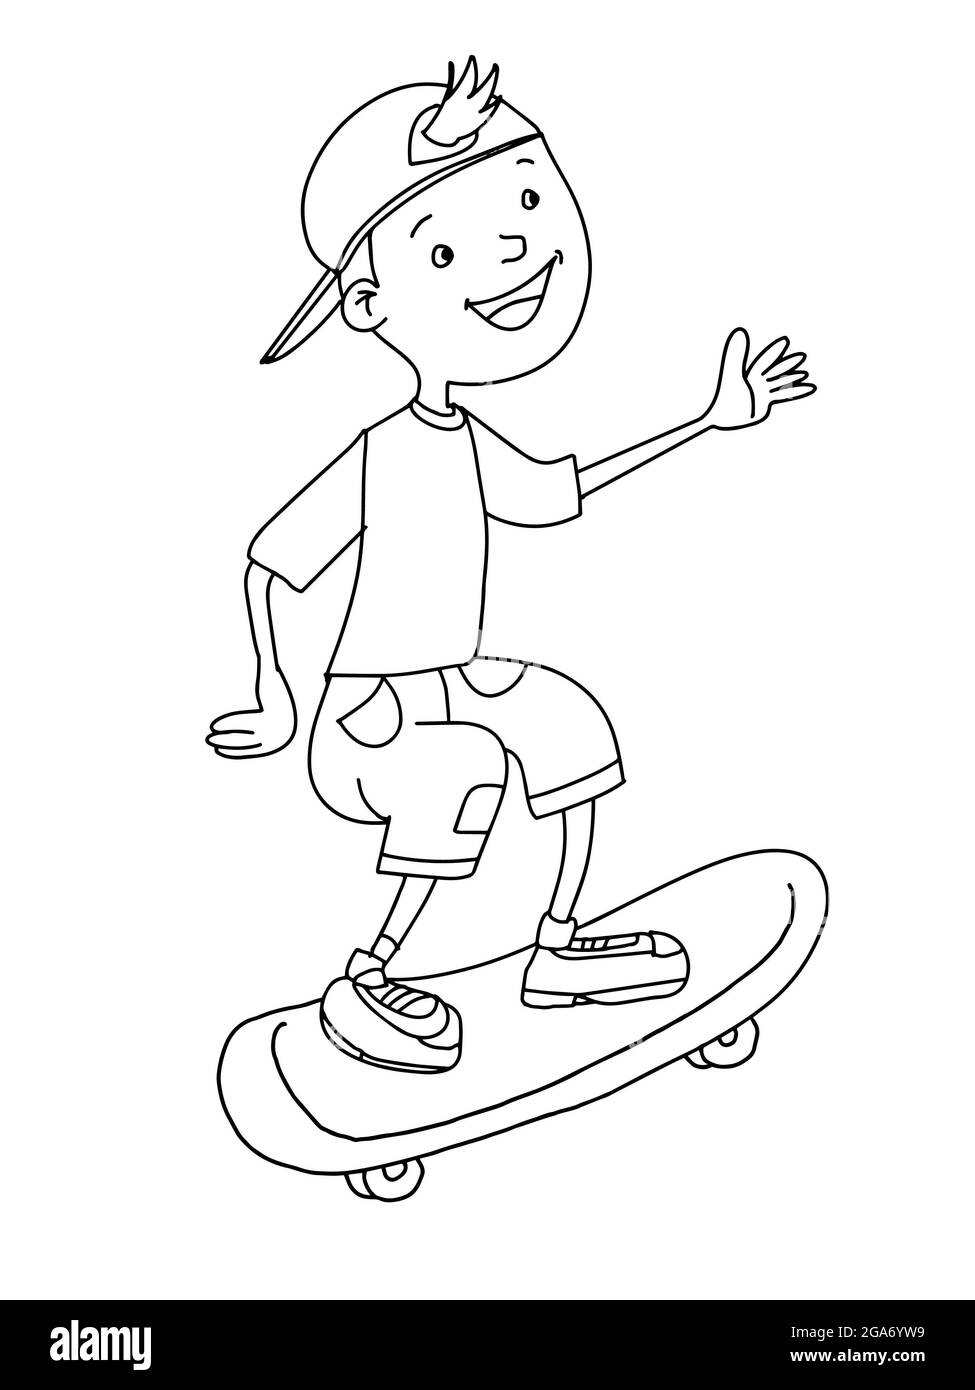 Cute, black  boy , cartoon illustration ,skating.Line drawing Stock Photo